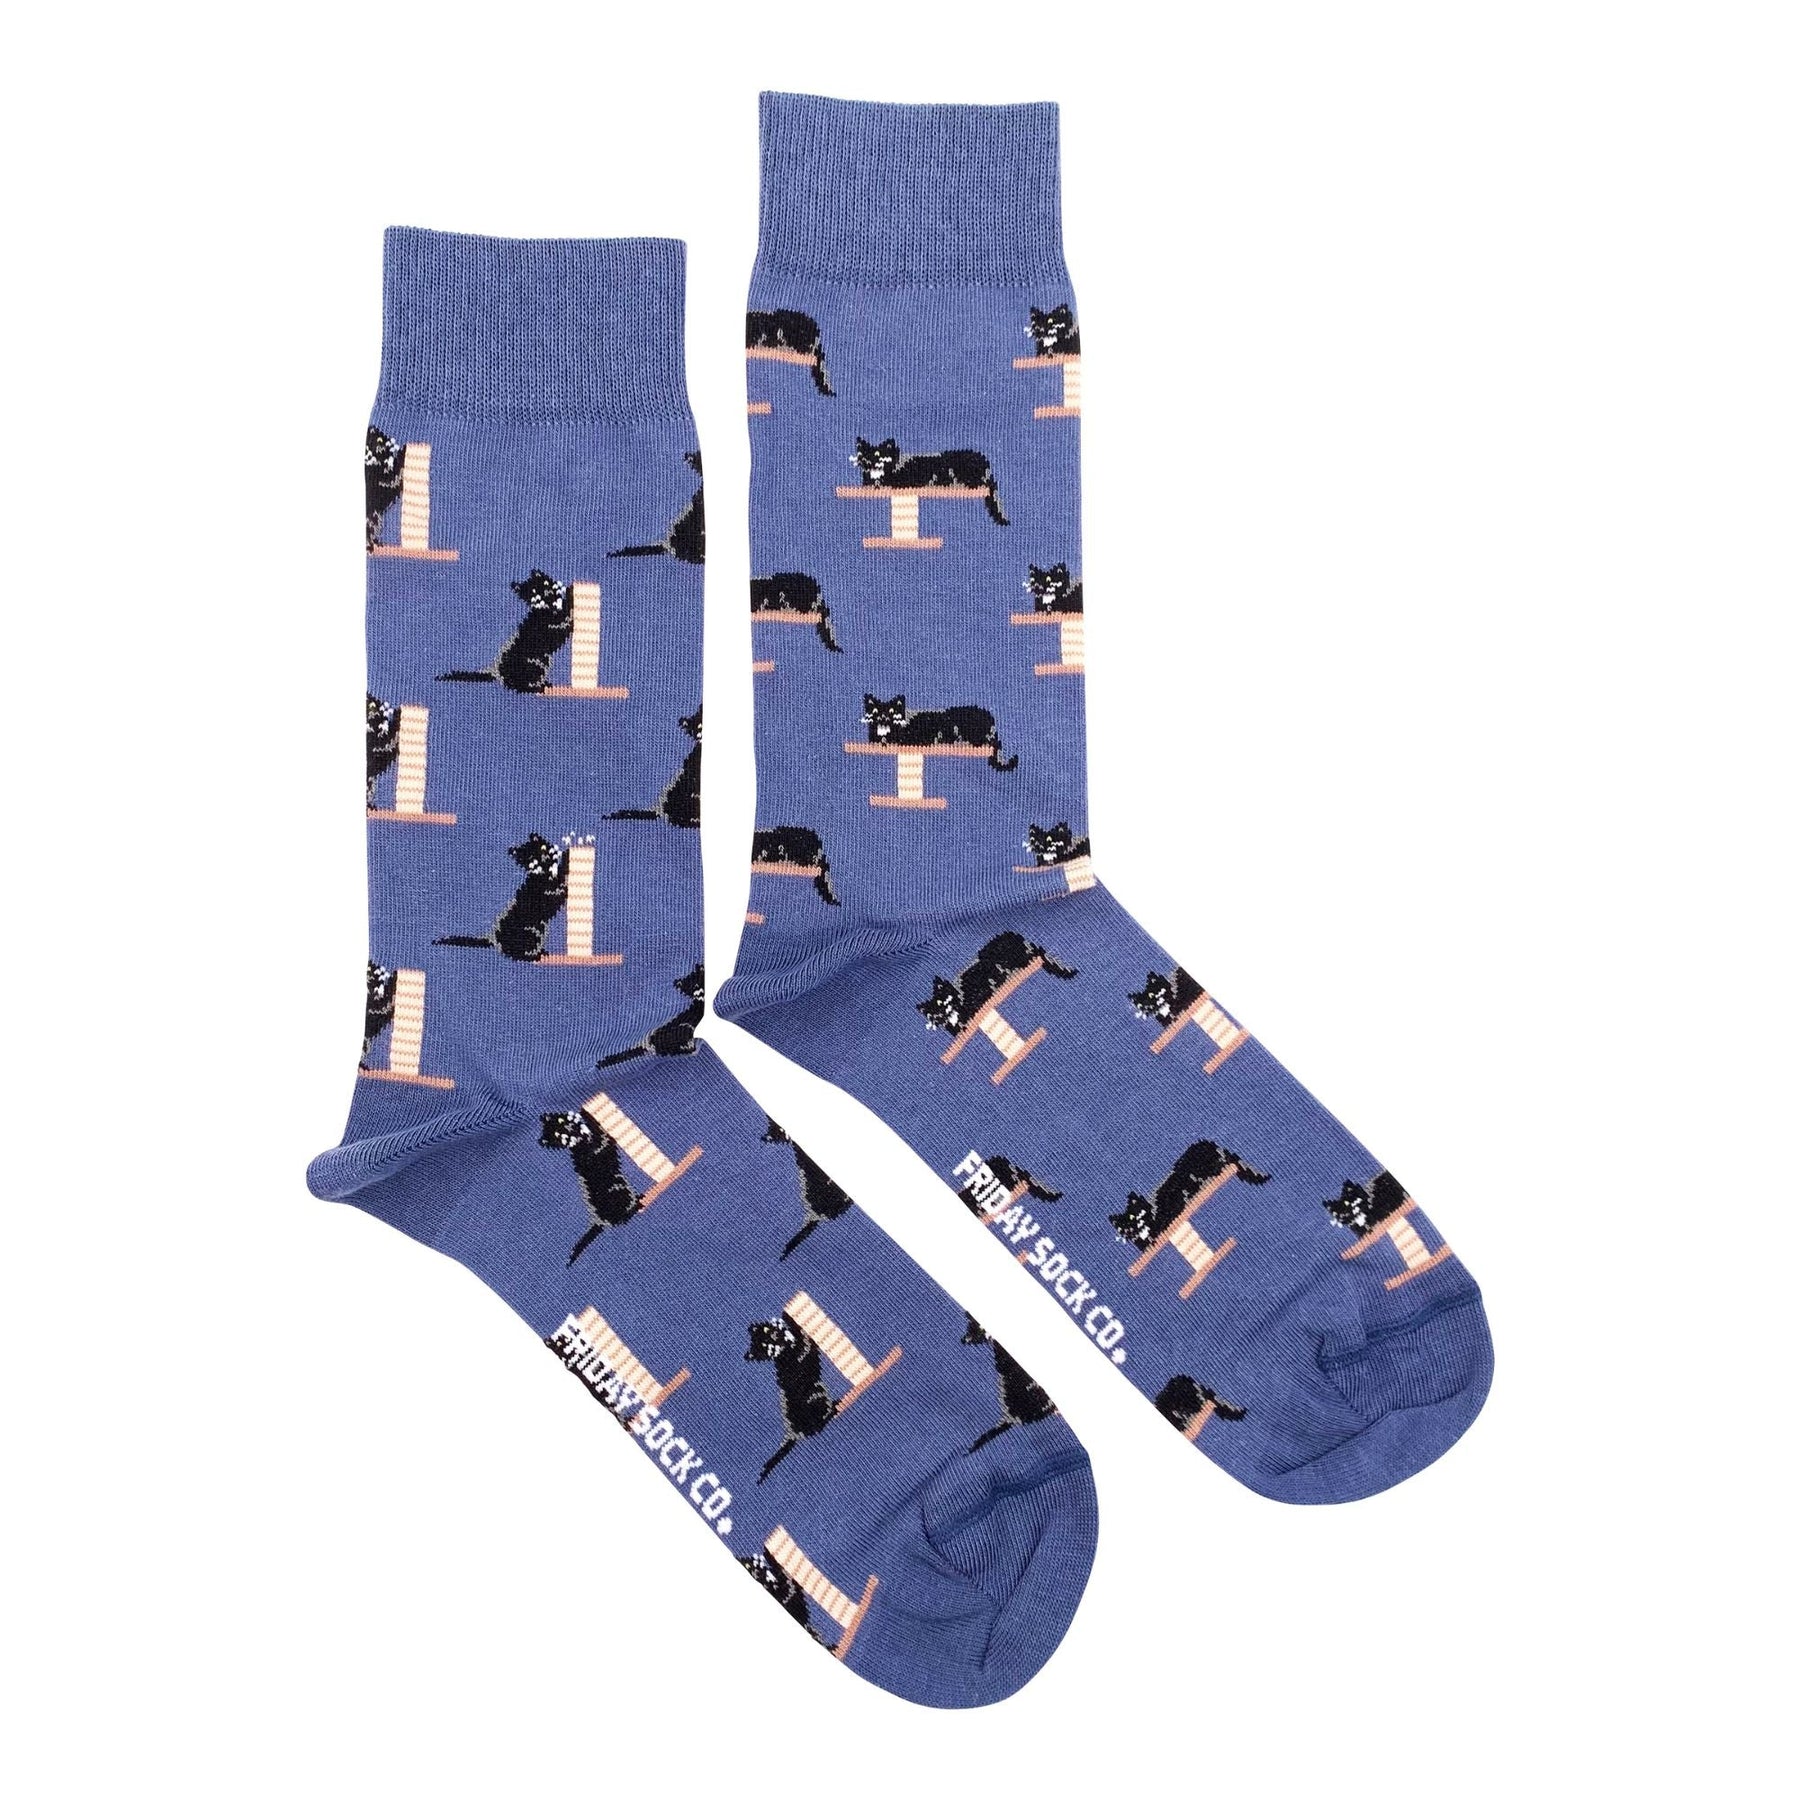 Friday Sock Co. - Men's Socks Cozy Cat Mismatched